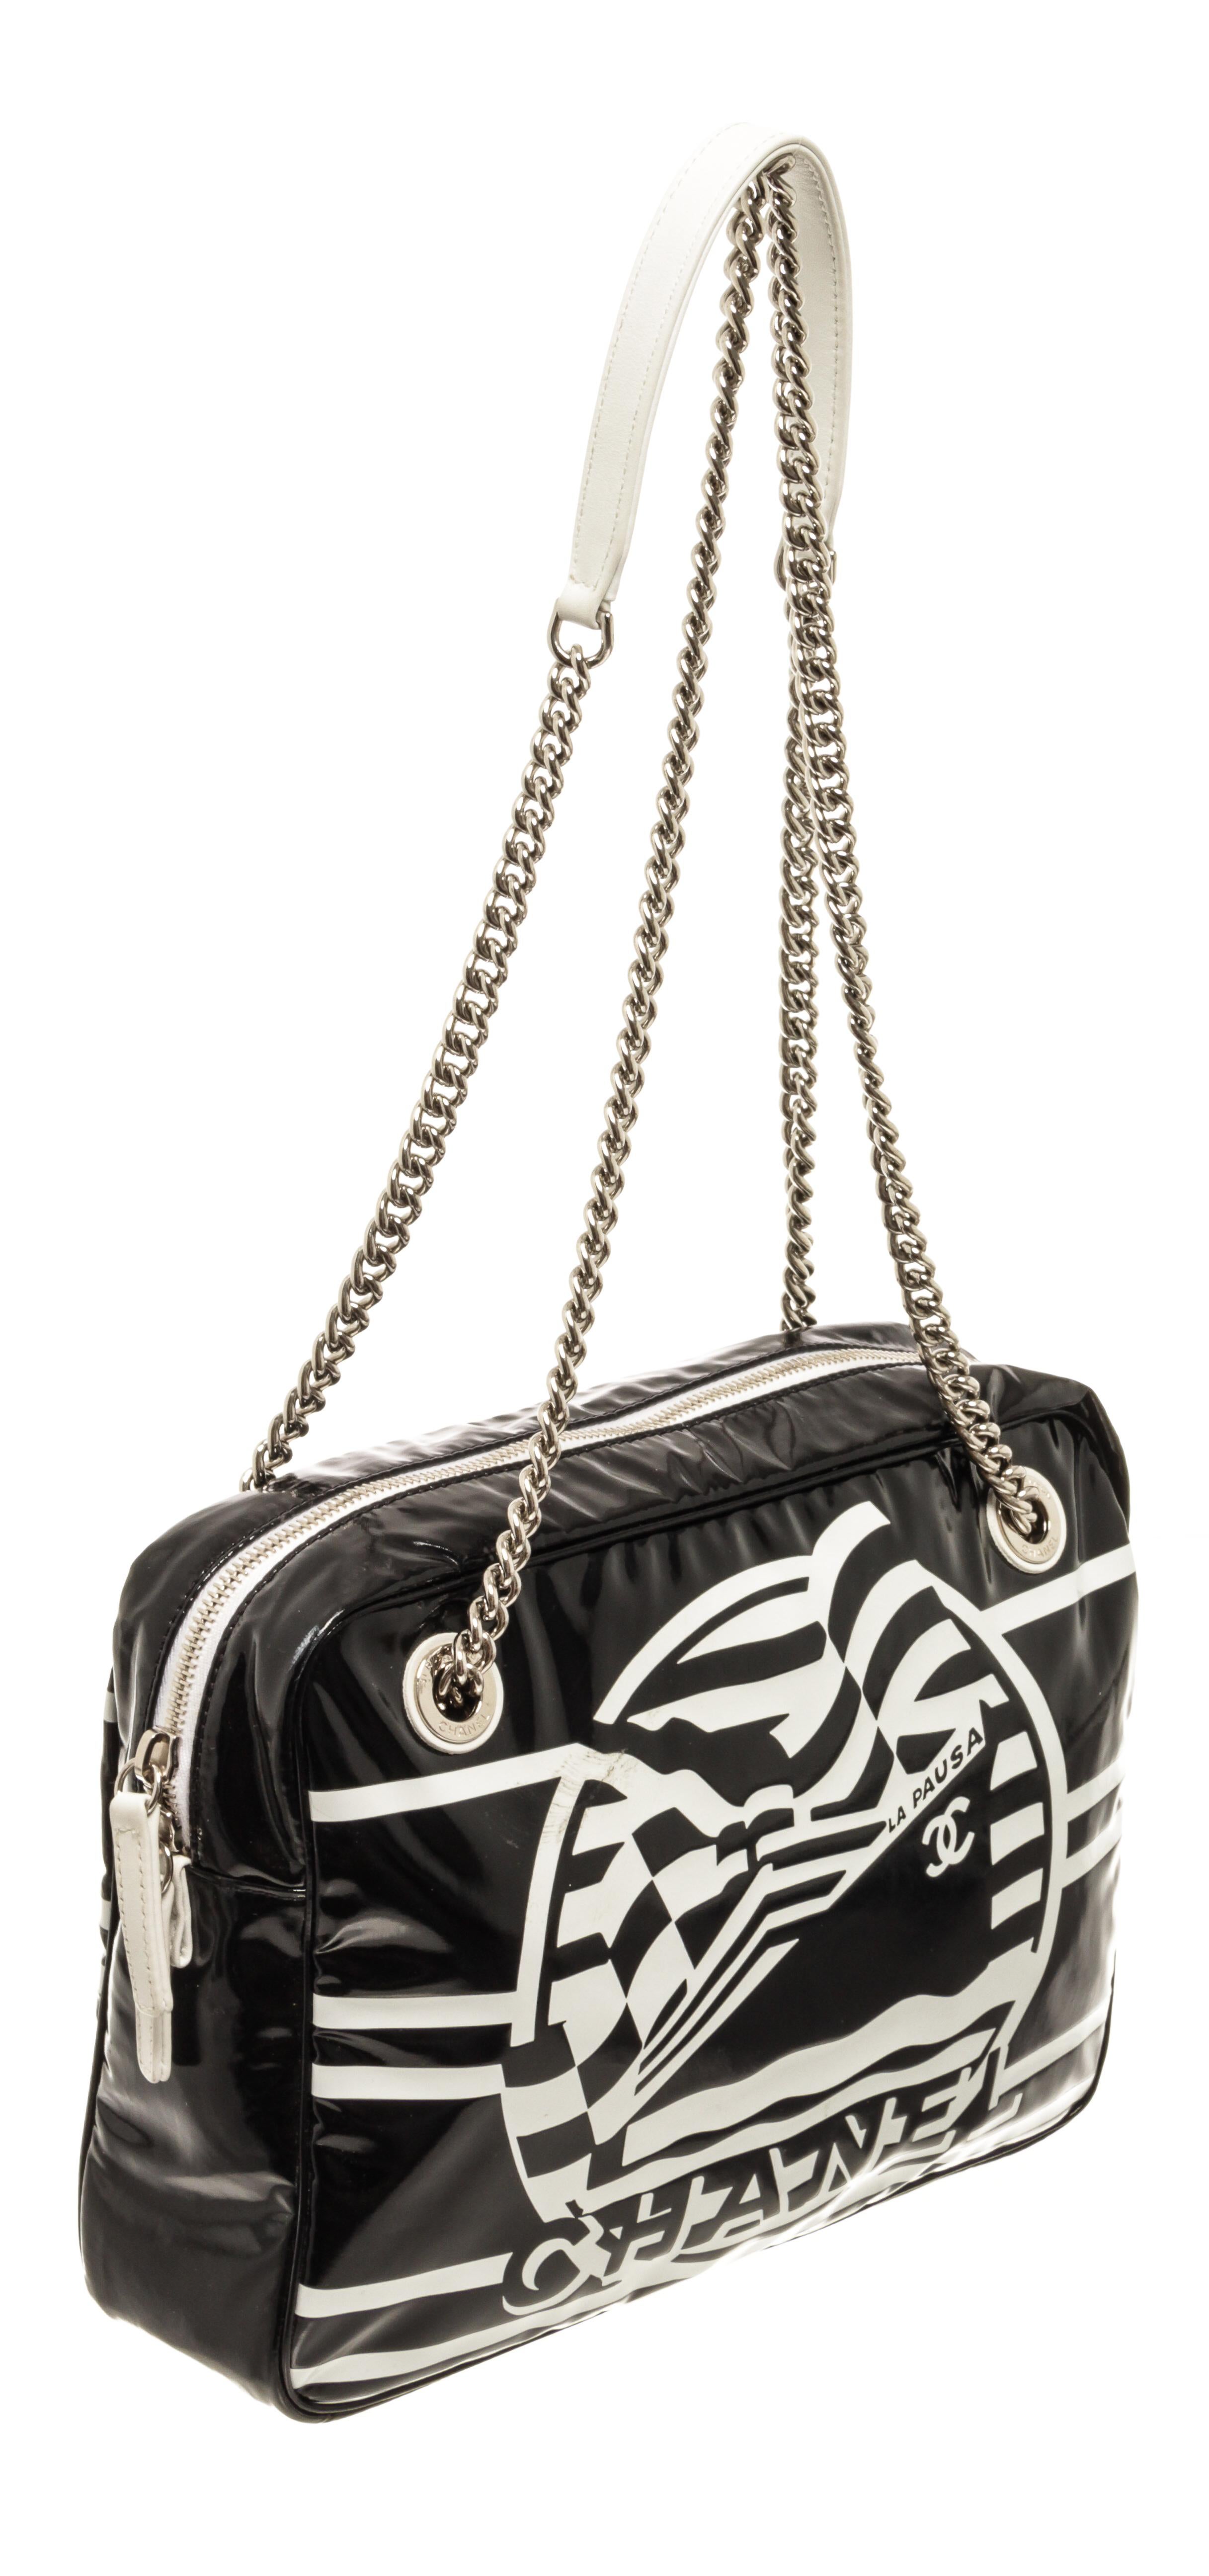 Chanel Black White Vinyl La Pausa Bay Bag with chain shoulder strap, fabric, silver hardware, zipper closure.

73930MSC